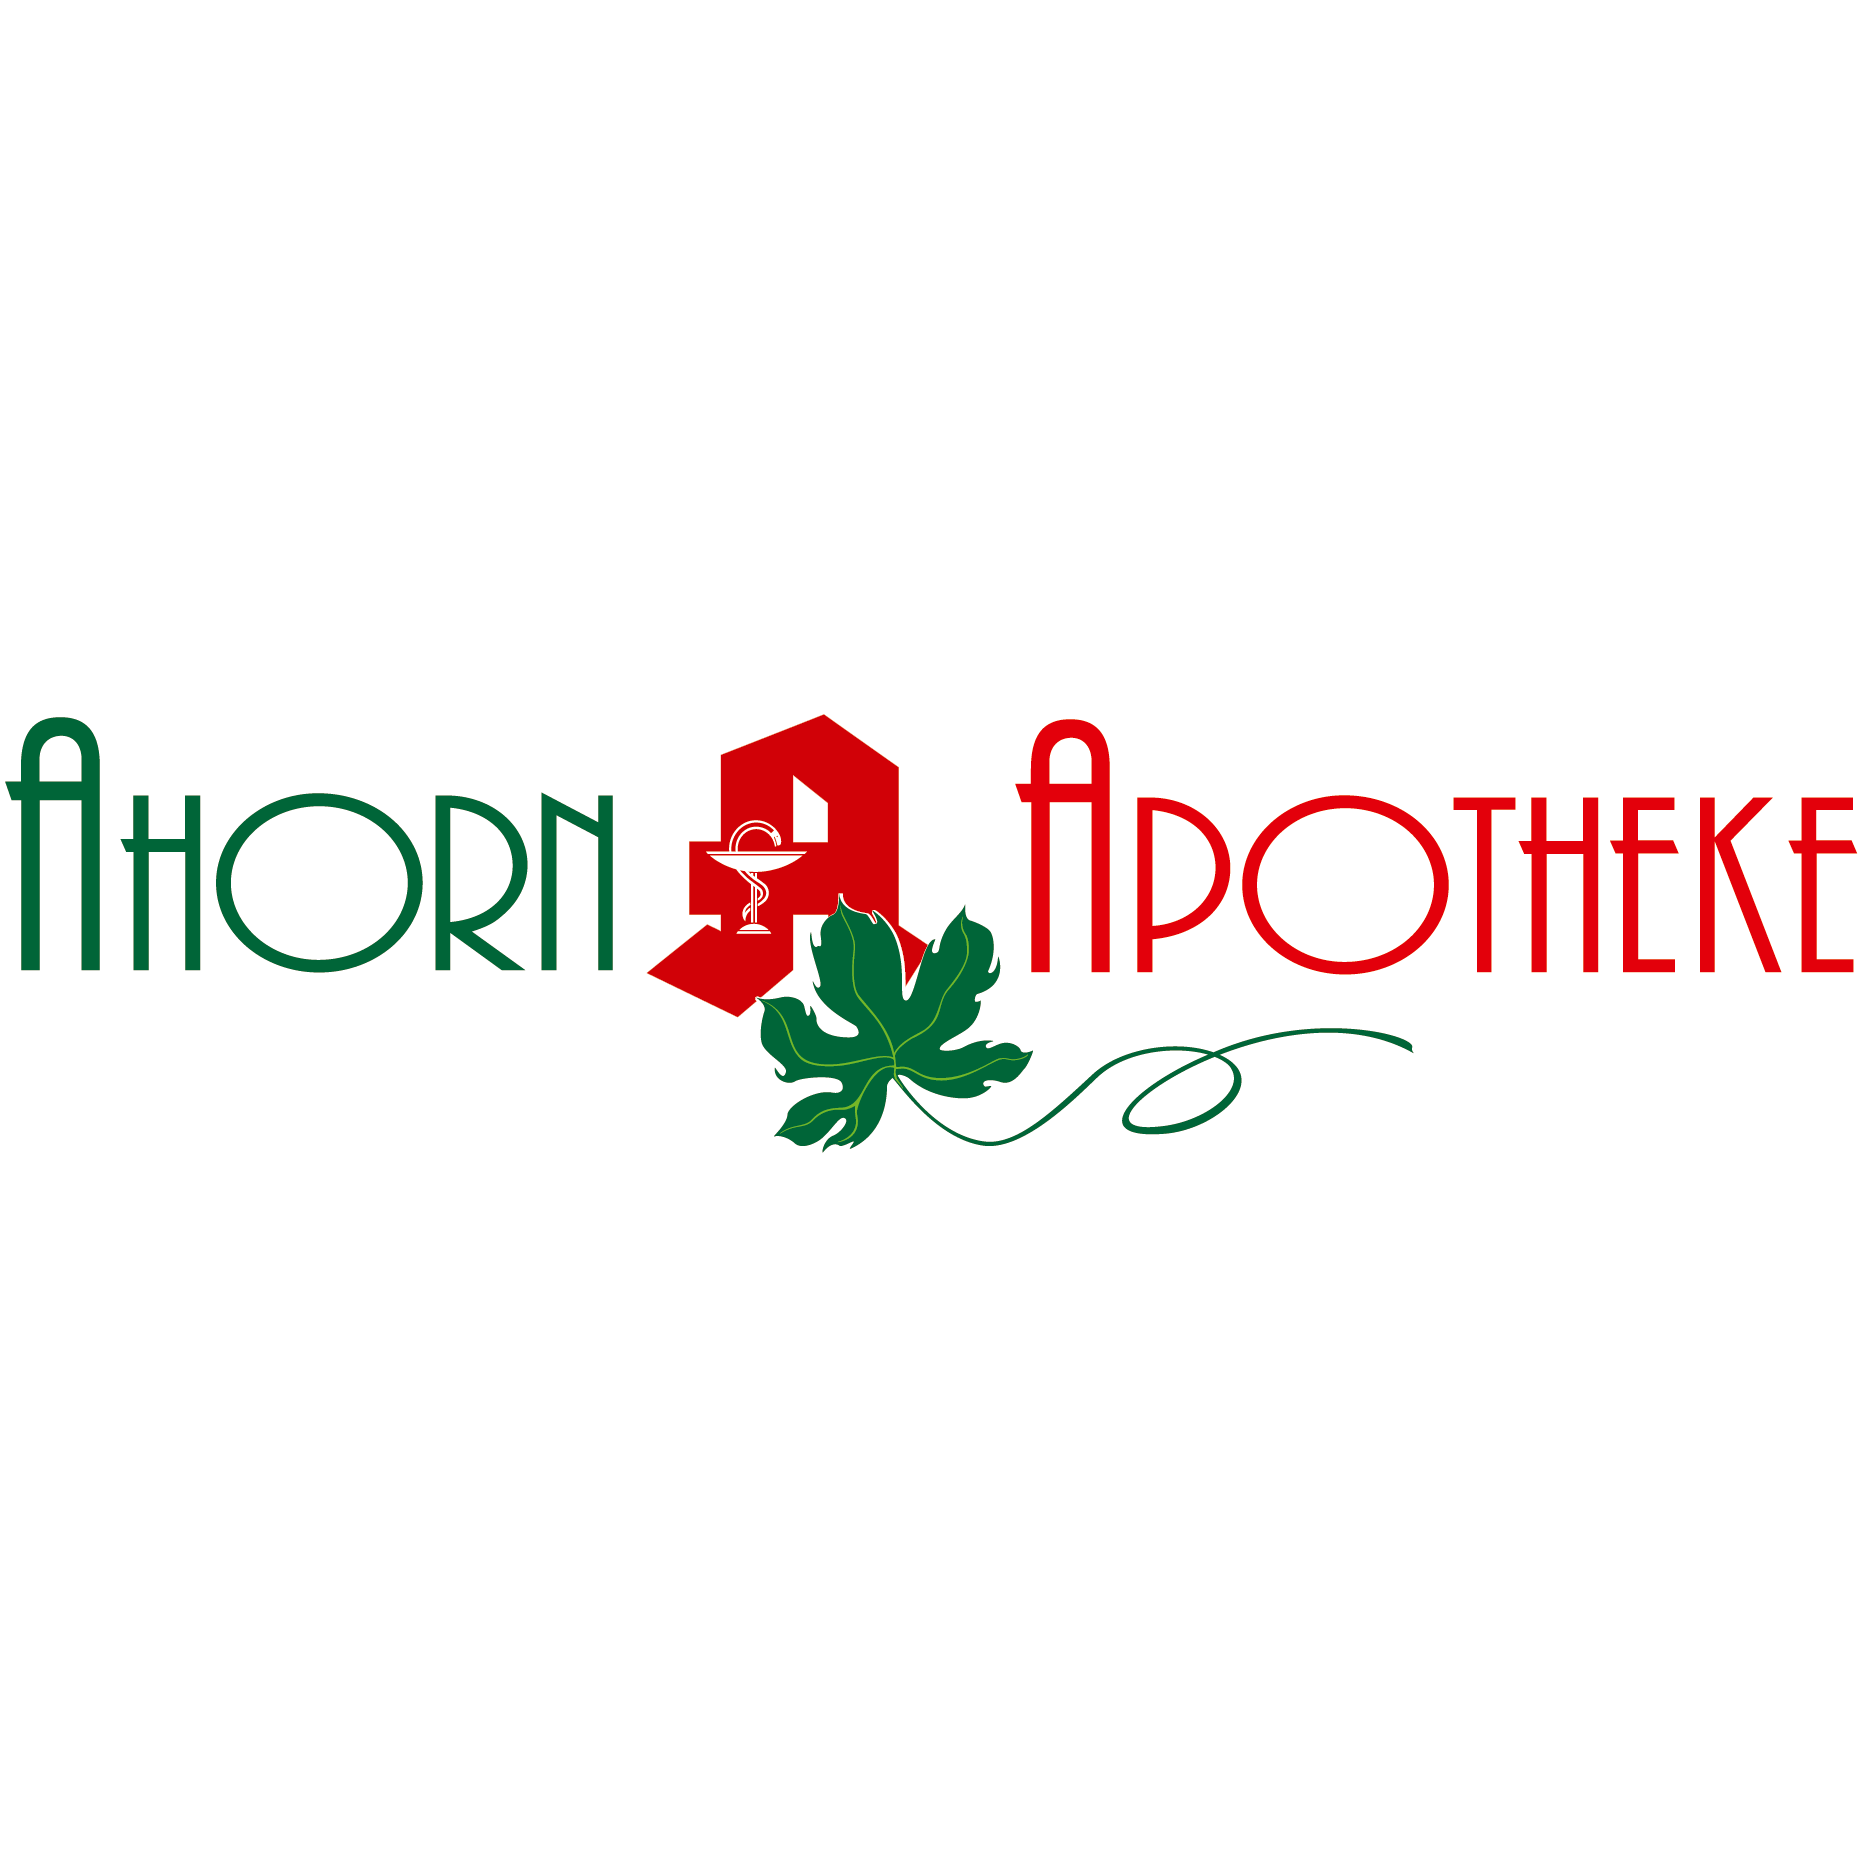 Ahorn-Apotheke in Dortmund - Logo